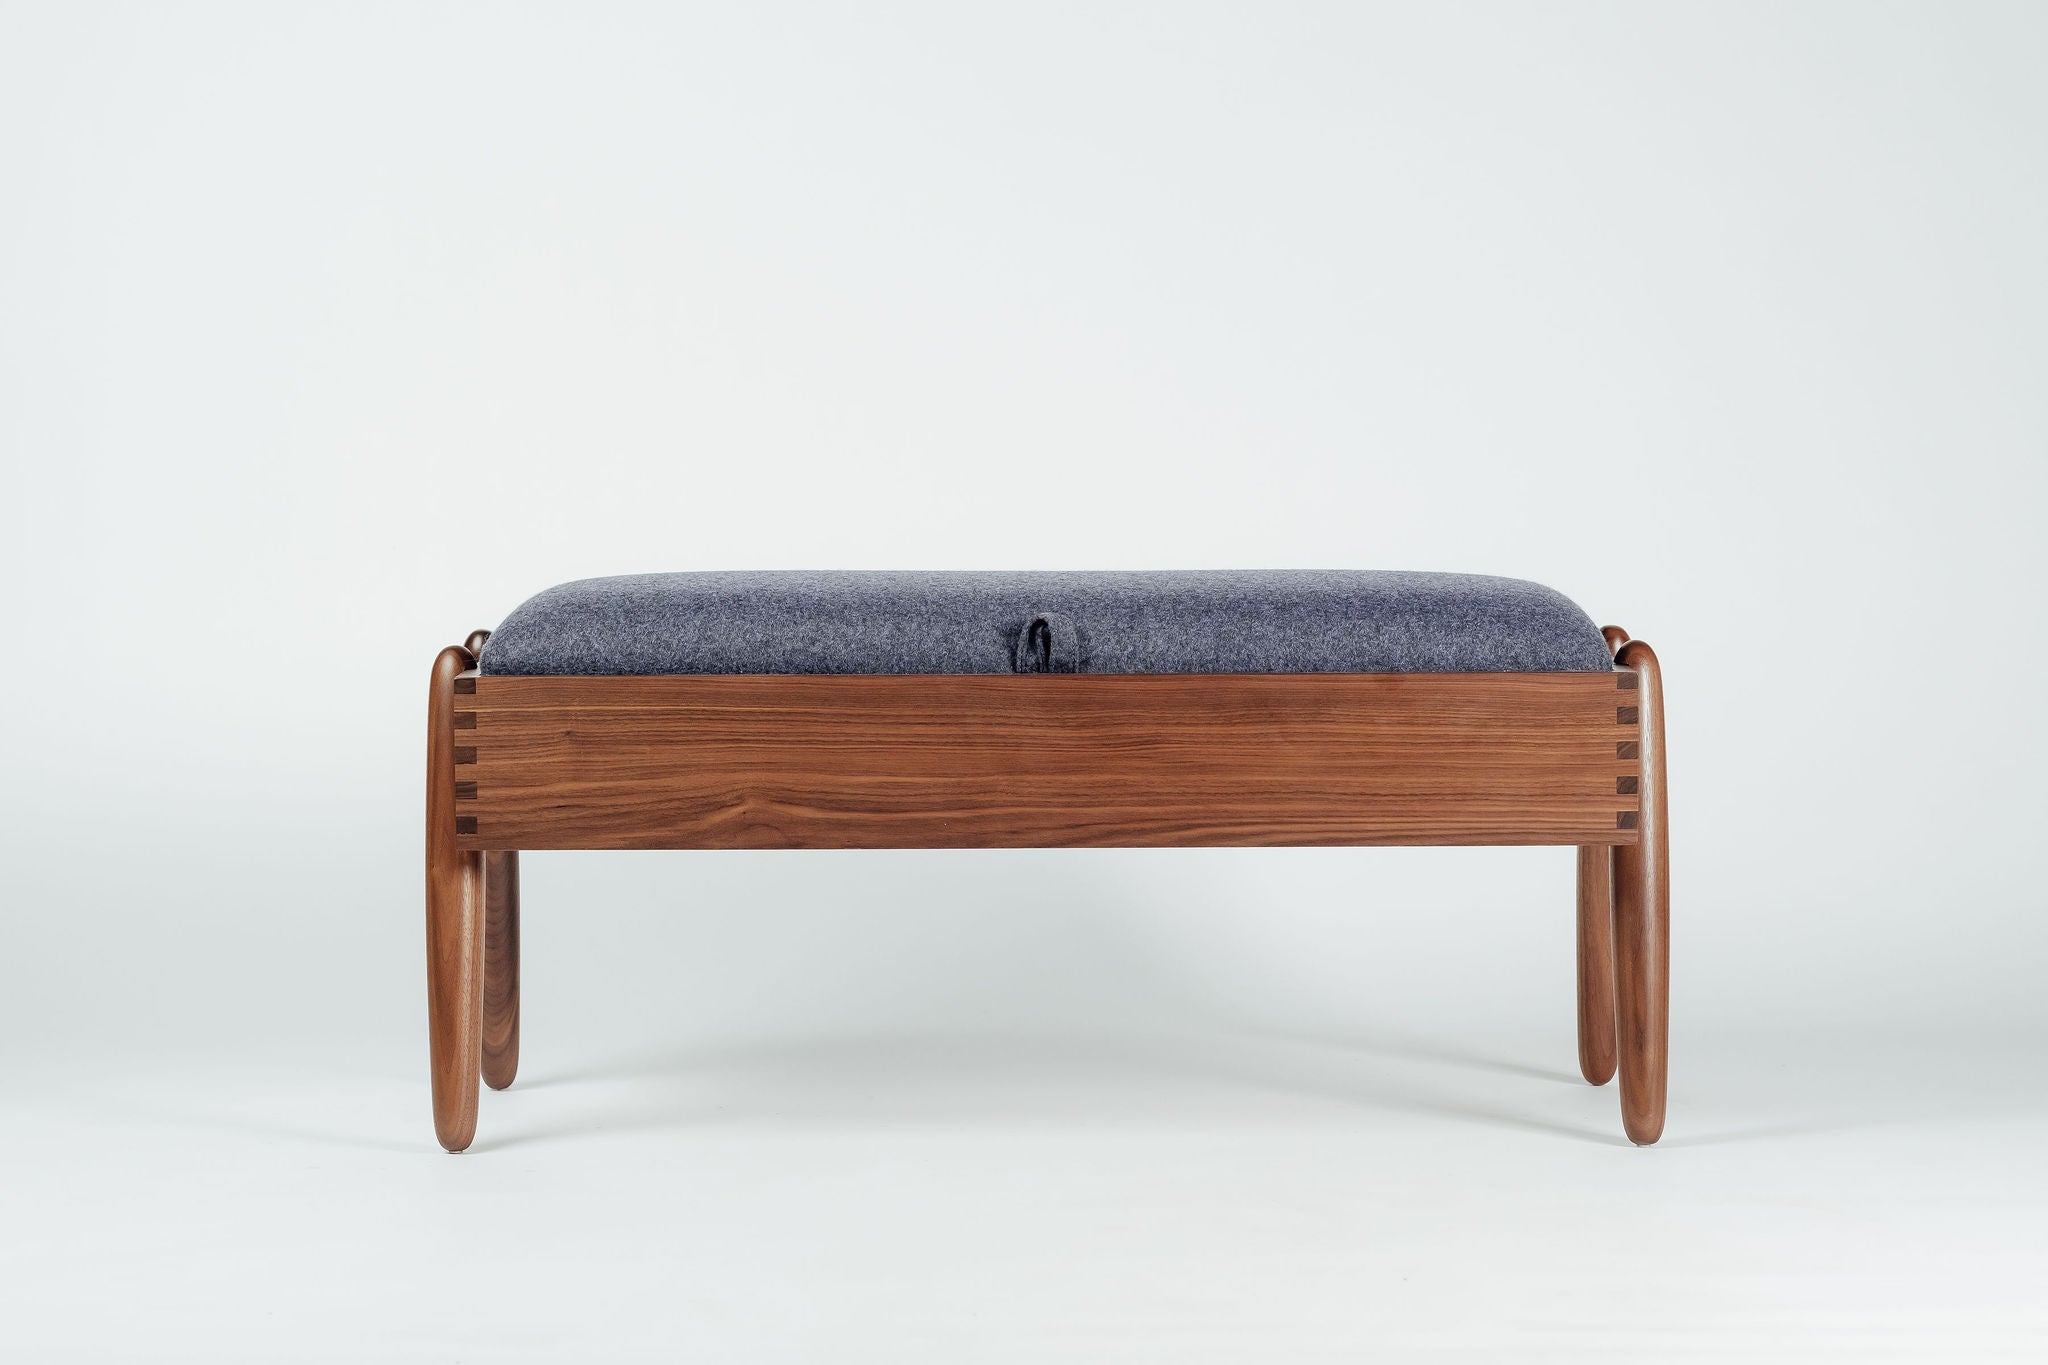 Solomon midcentury modern walnut upholstered storage bench handcrafted by Hunt & Noyer in Michigan